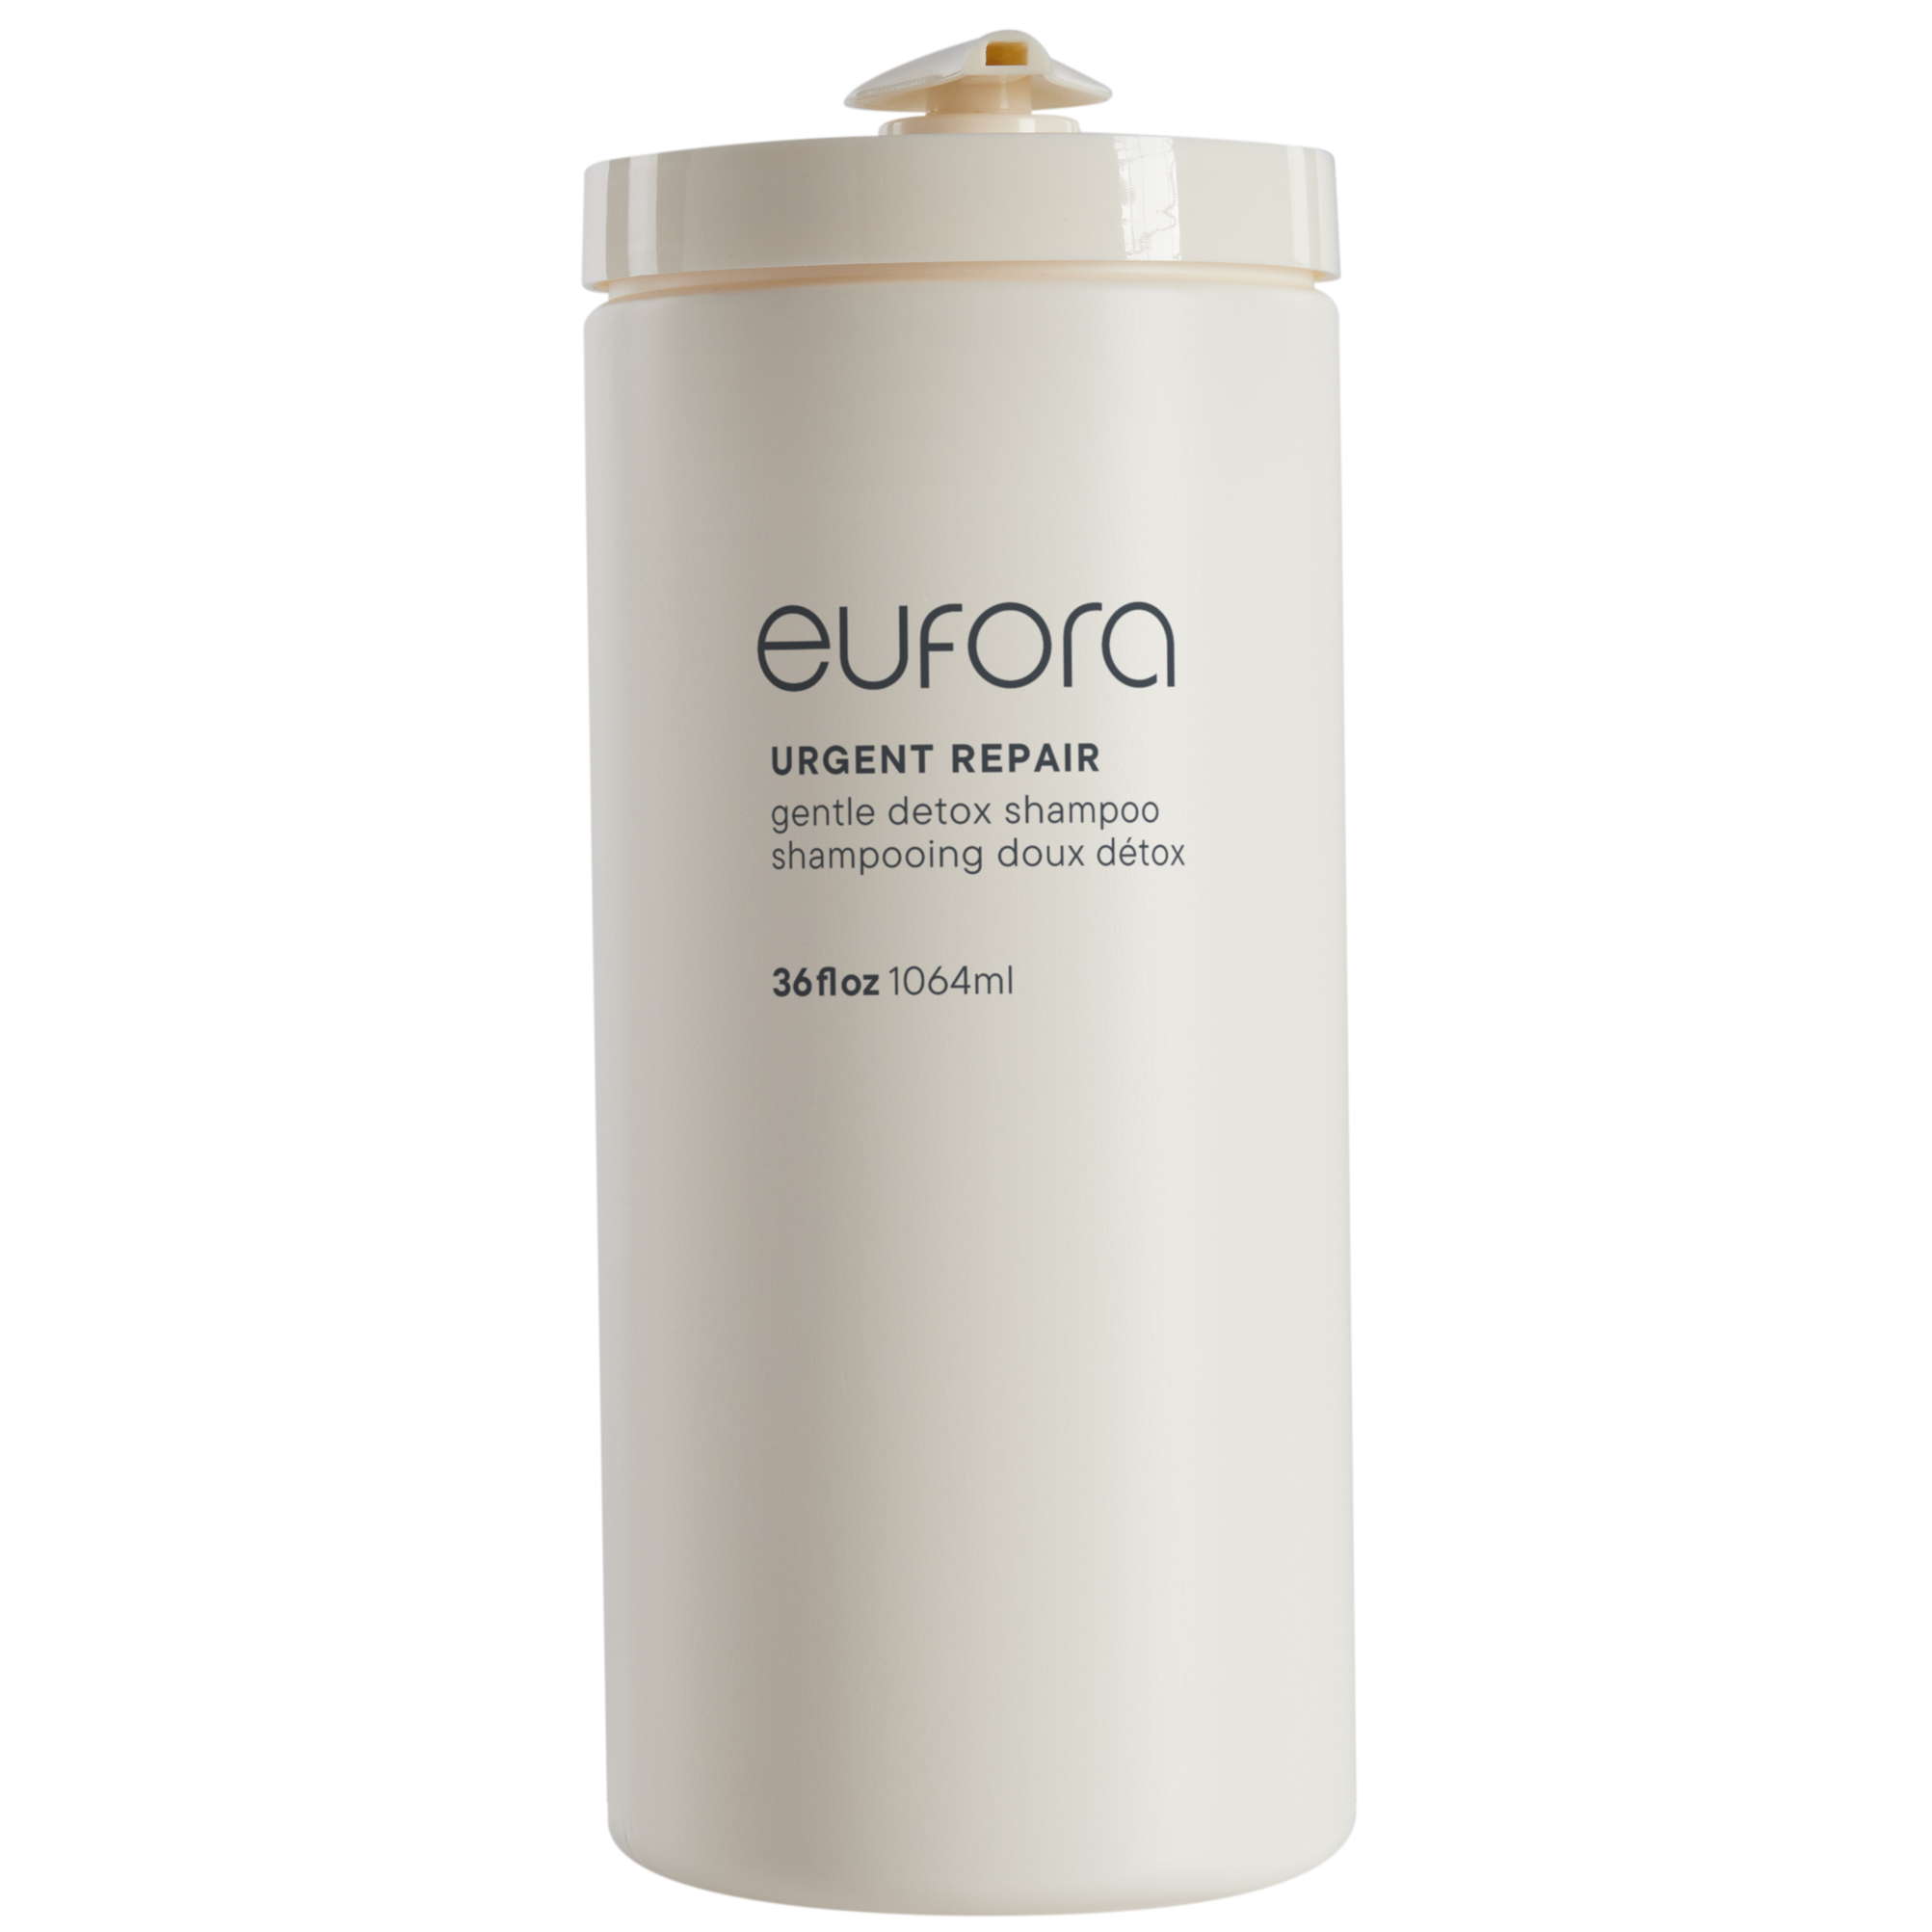 Eufora URGENT REPAIR Gentle Detox Shampoo